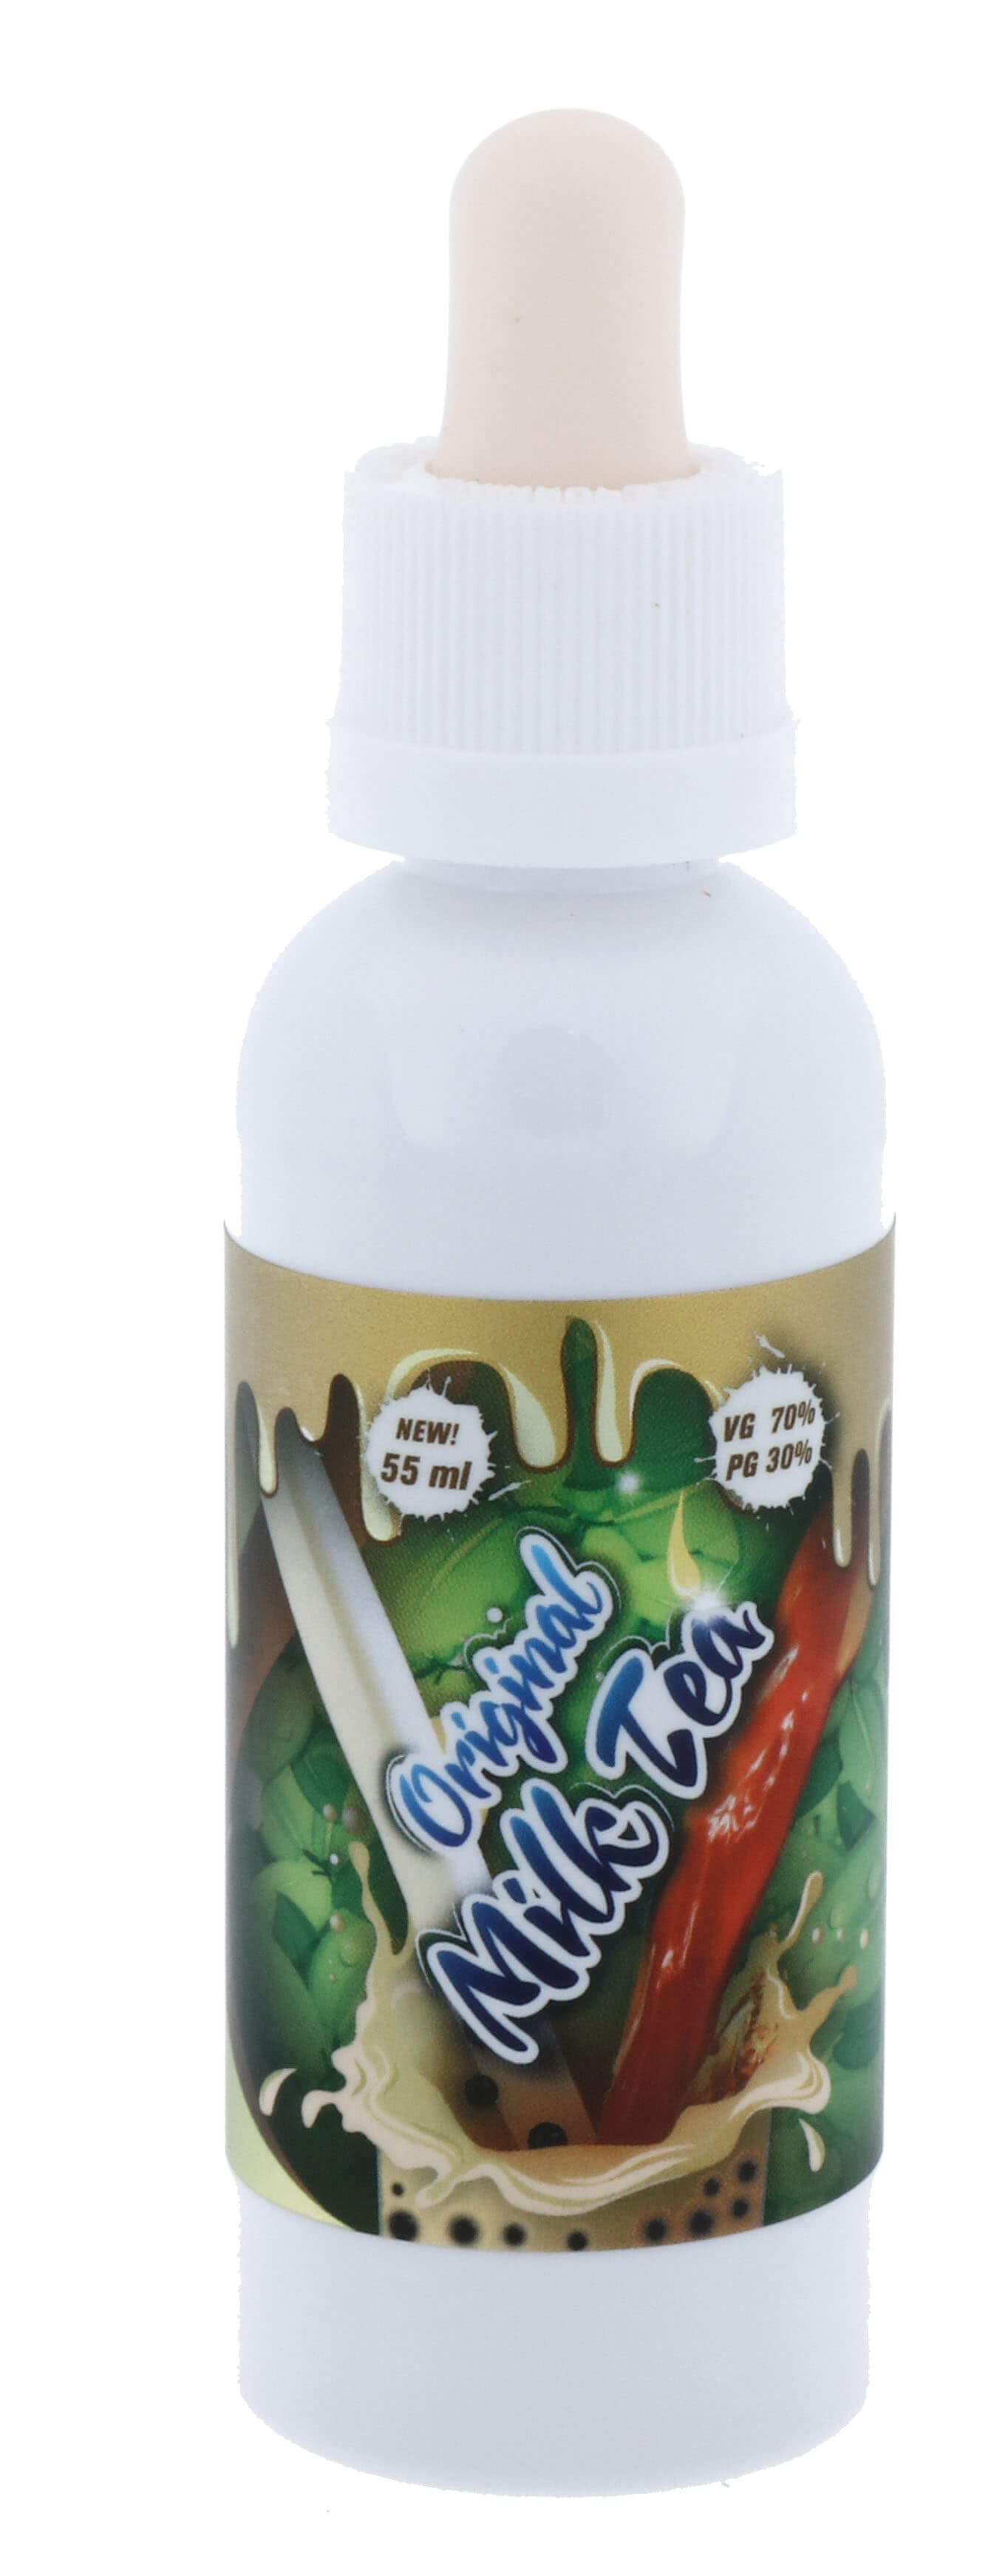 Fizzy Juice - Cream - Original Milk Tea - 55ml - 0mg/ml